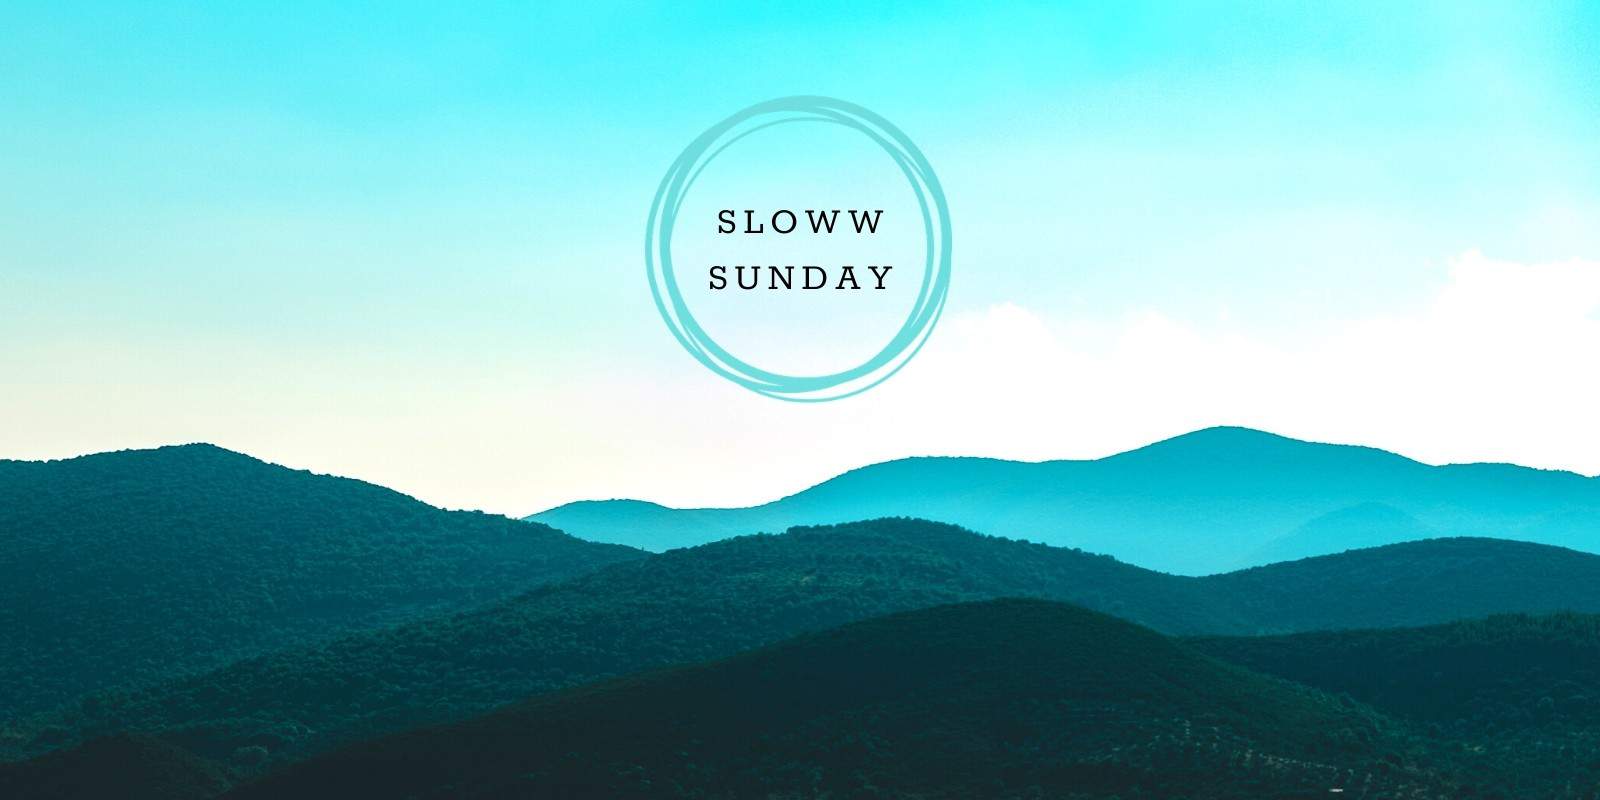 Sloww Sunday Newsletter 046 (Jan 24, 2021) — Seeking True Wealth, Living Integrally, Finding Meaning, & More